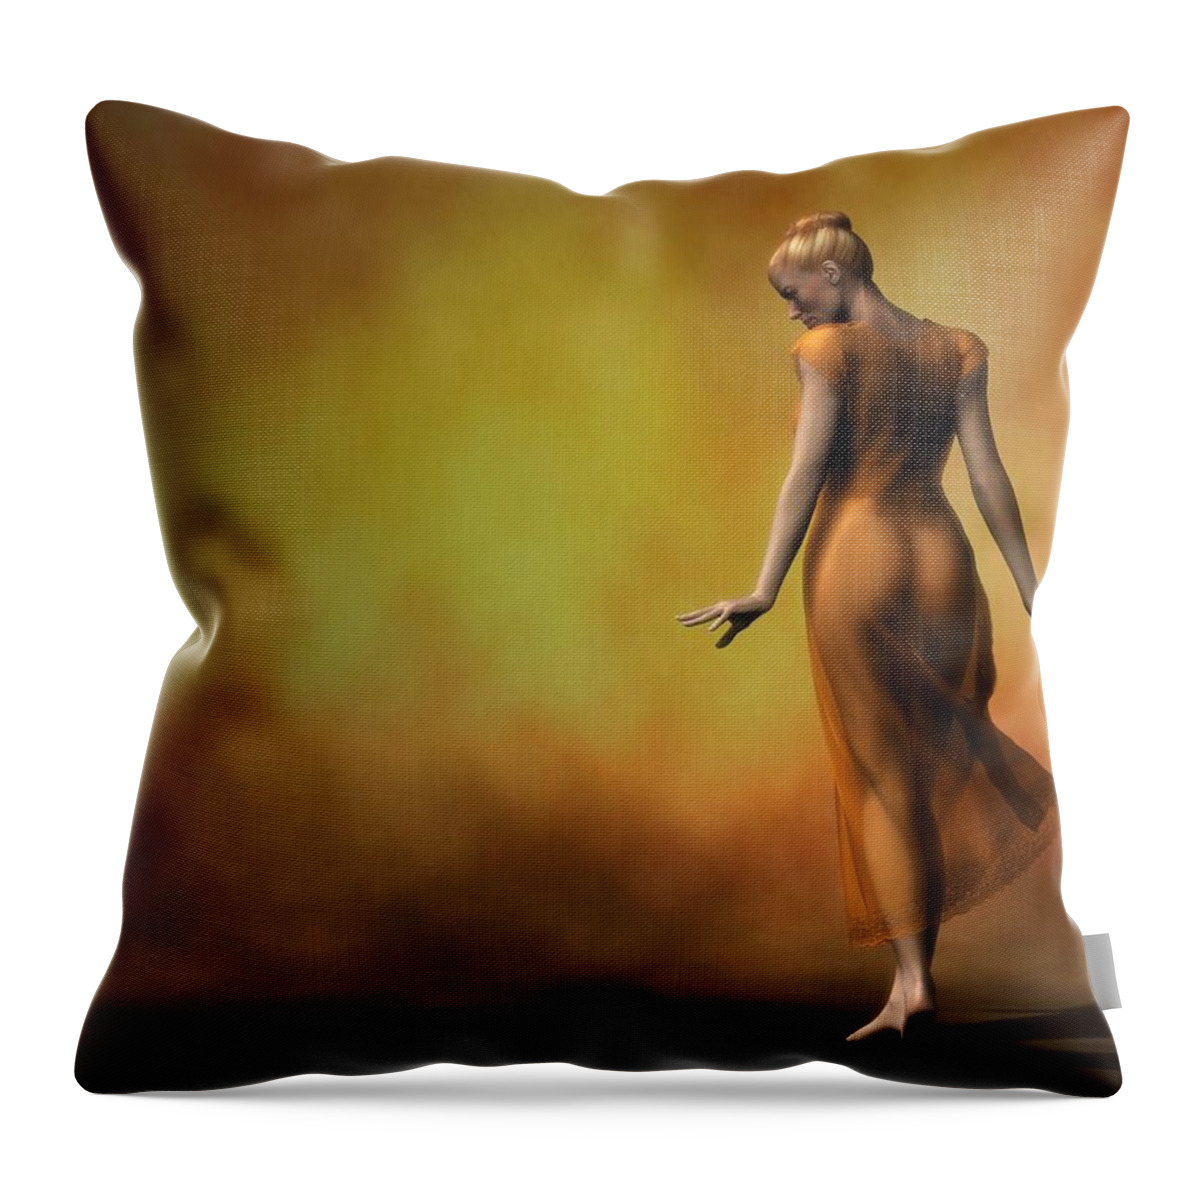  Throw Pillow featuring the digital art Orange Strut by Kaylee Mason